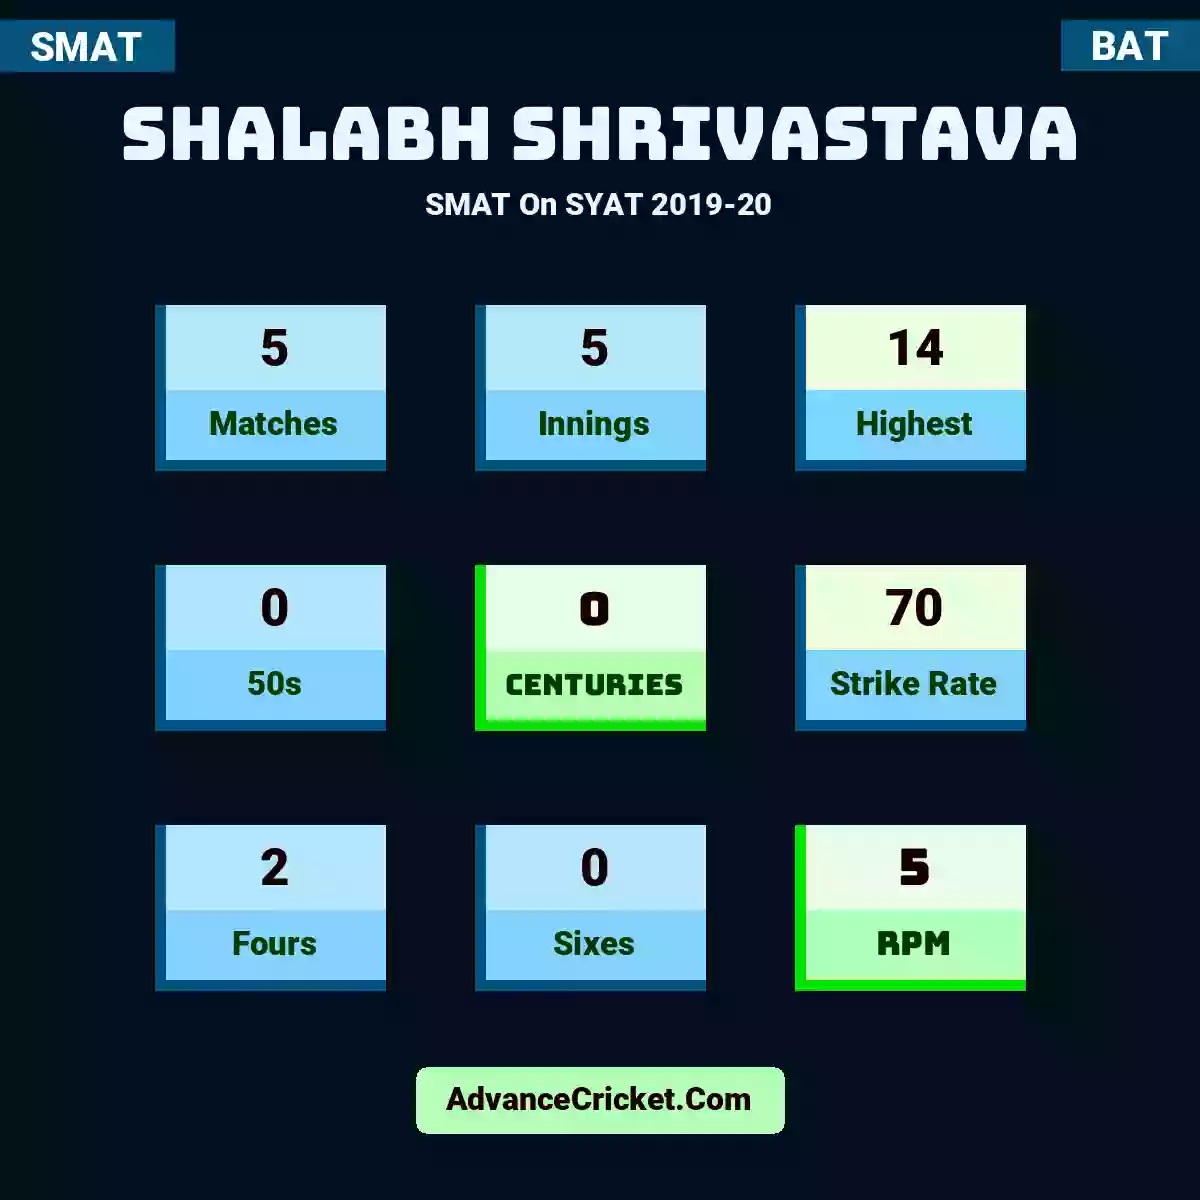 Shalabh Shrivastava SMAT  On SYAT 2019-20, Shalabh Shrivastava played 5 matches, scored 14 runs as highest, 0 half-centuries, and 0 centuries, with a strike rate of 70. S.Shrivastava hit 2 fours and 0 sixes, with an RPM of 5.